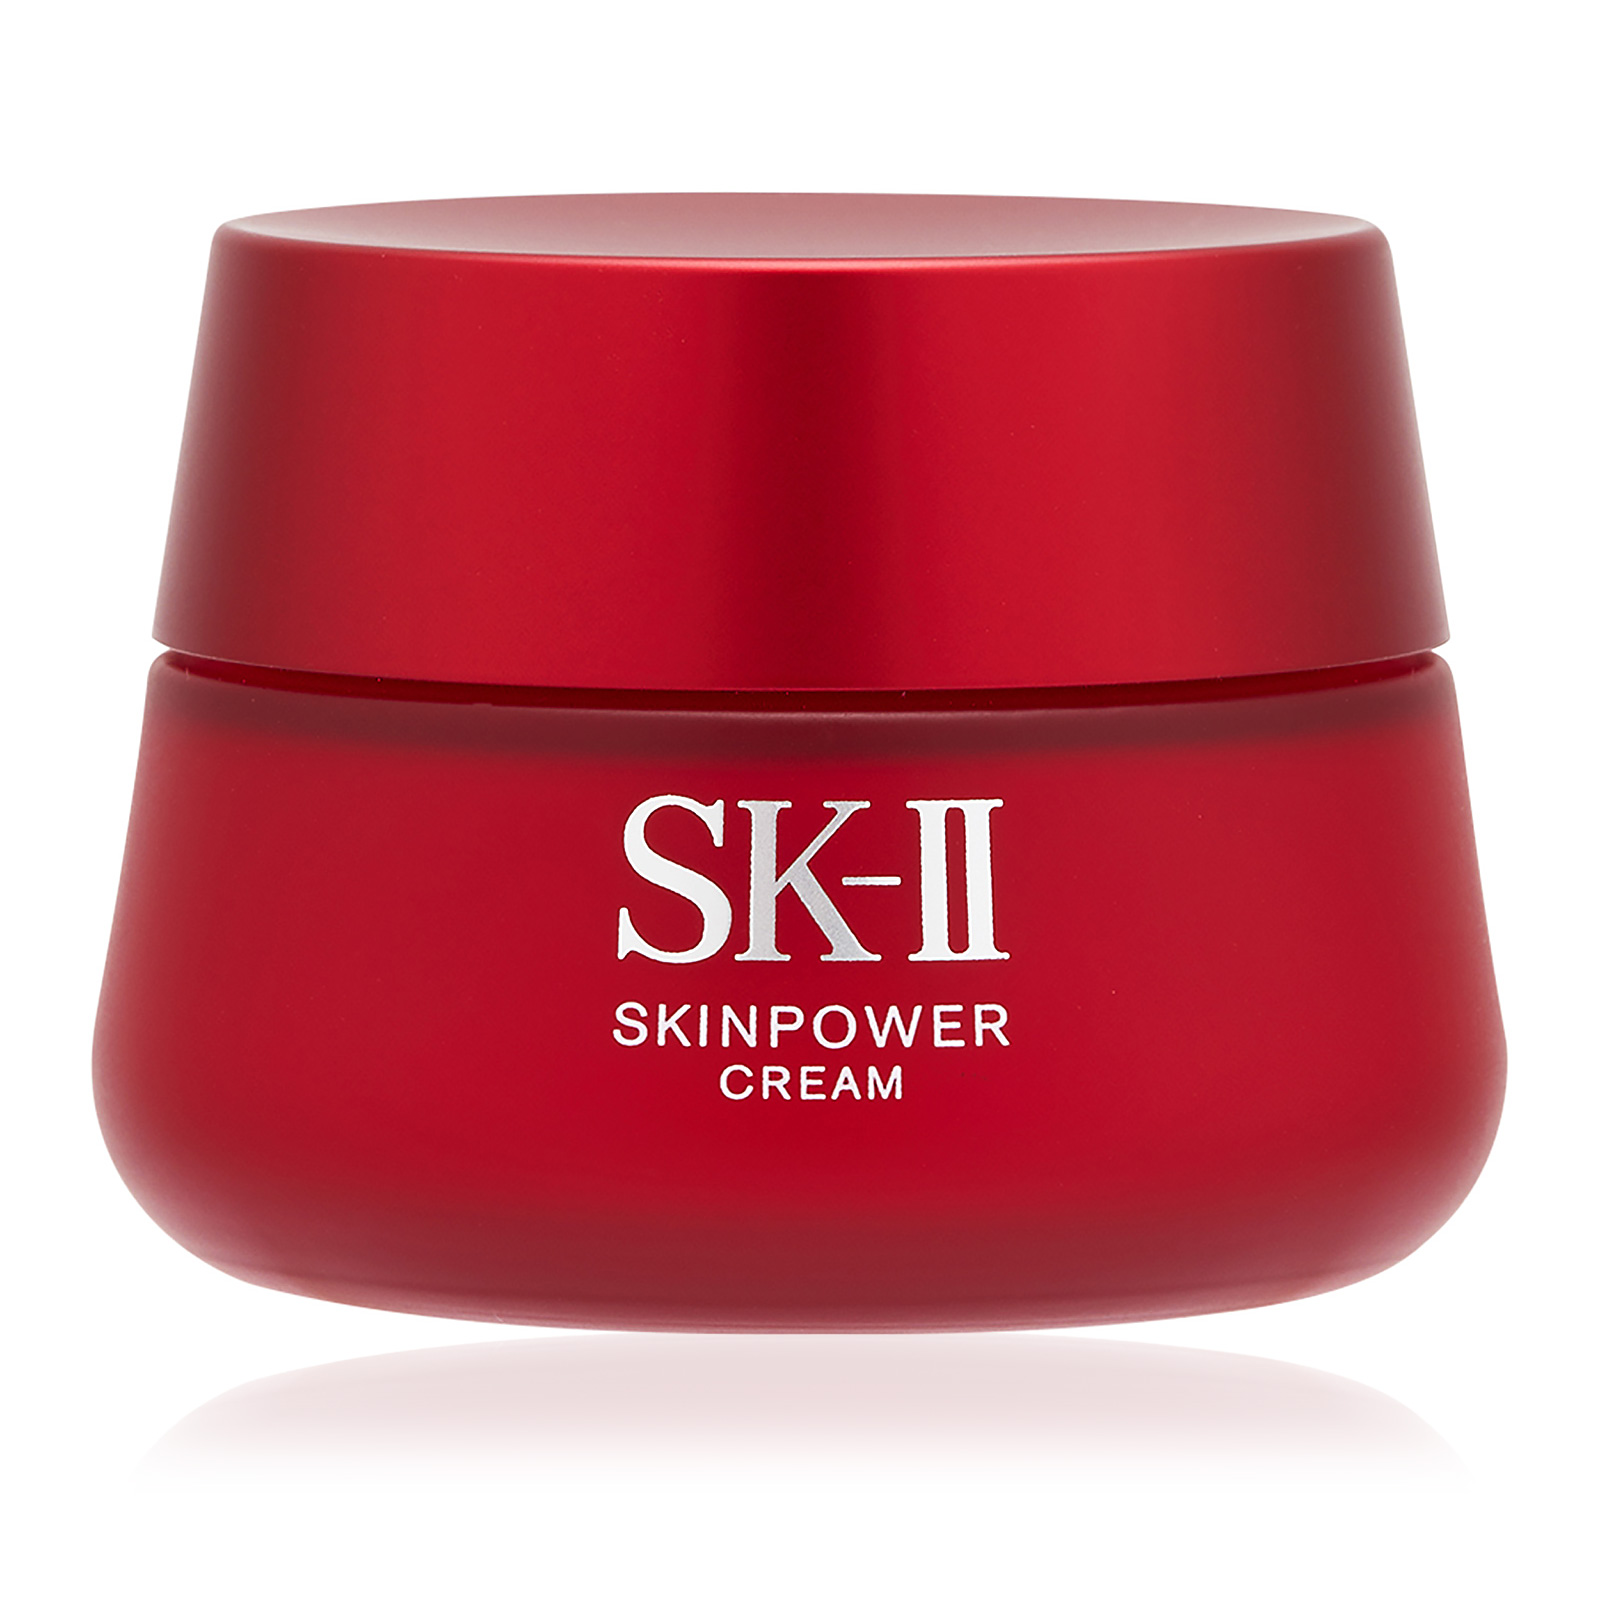 Skinpower Cream